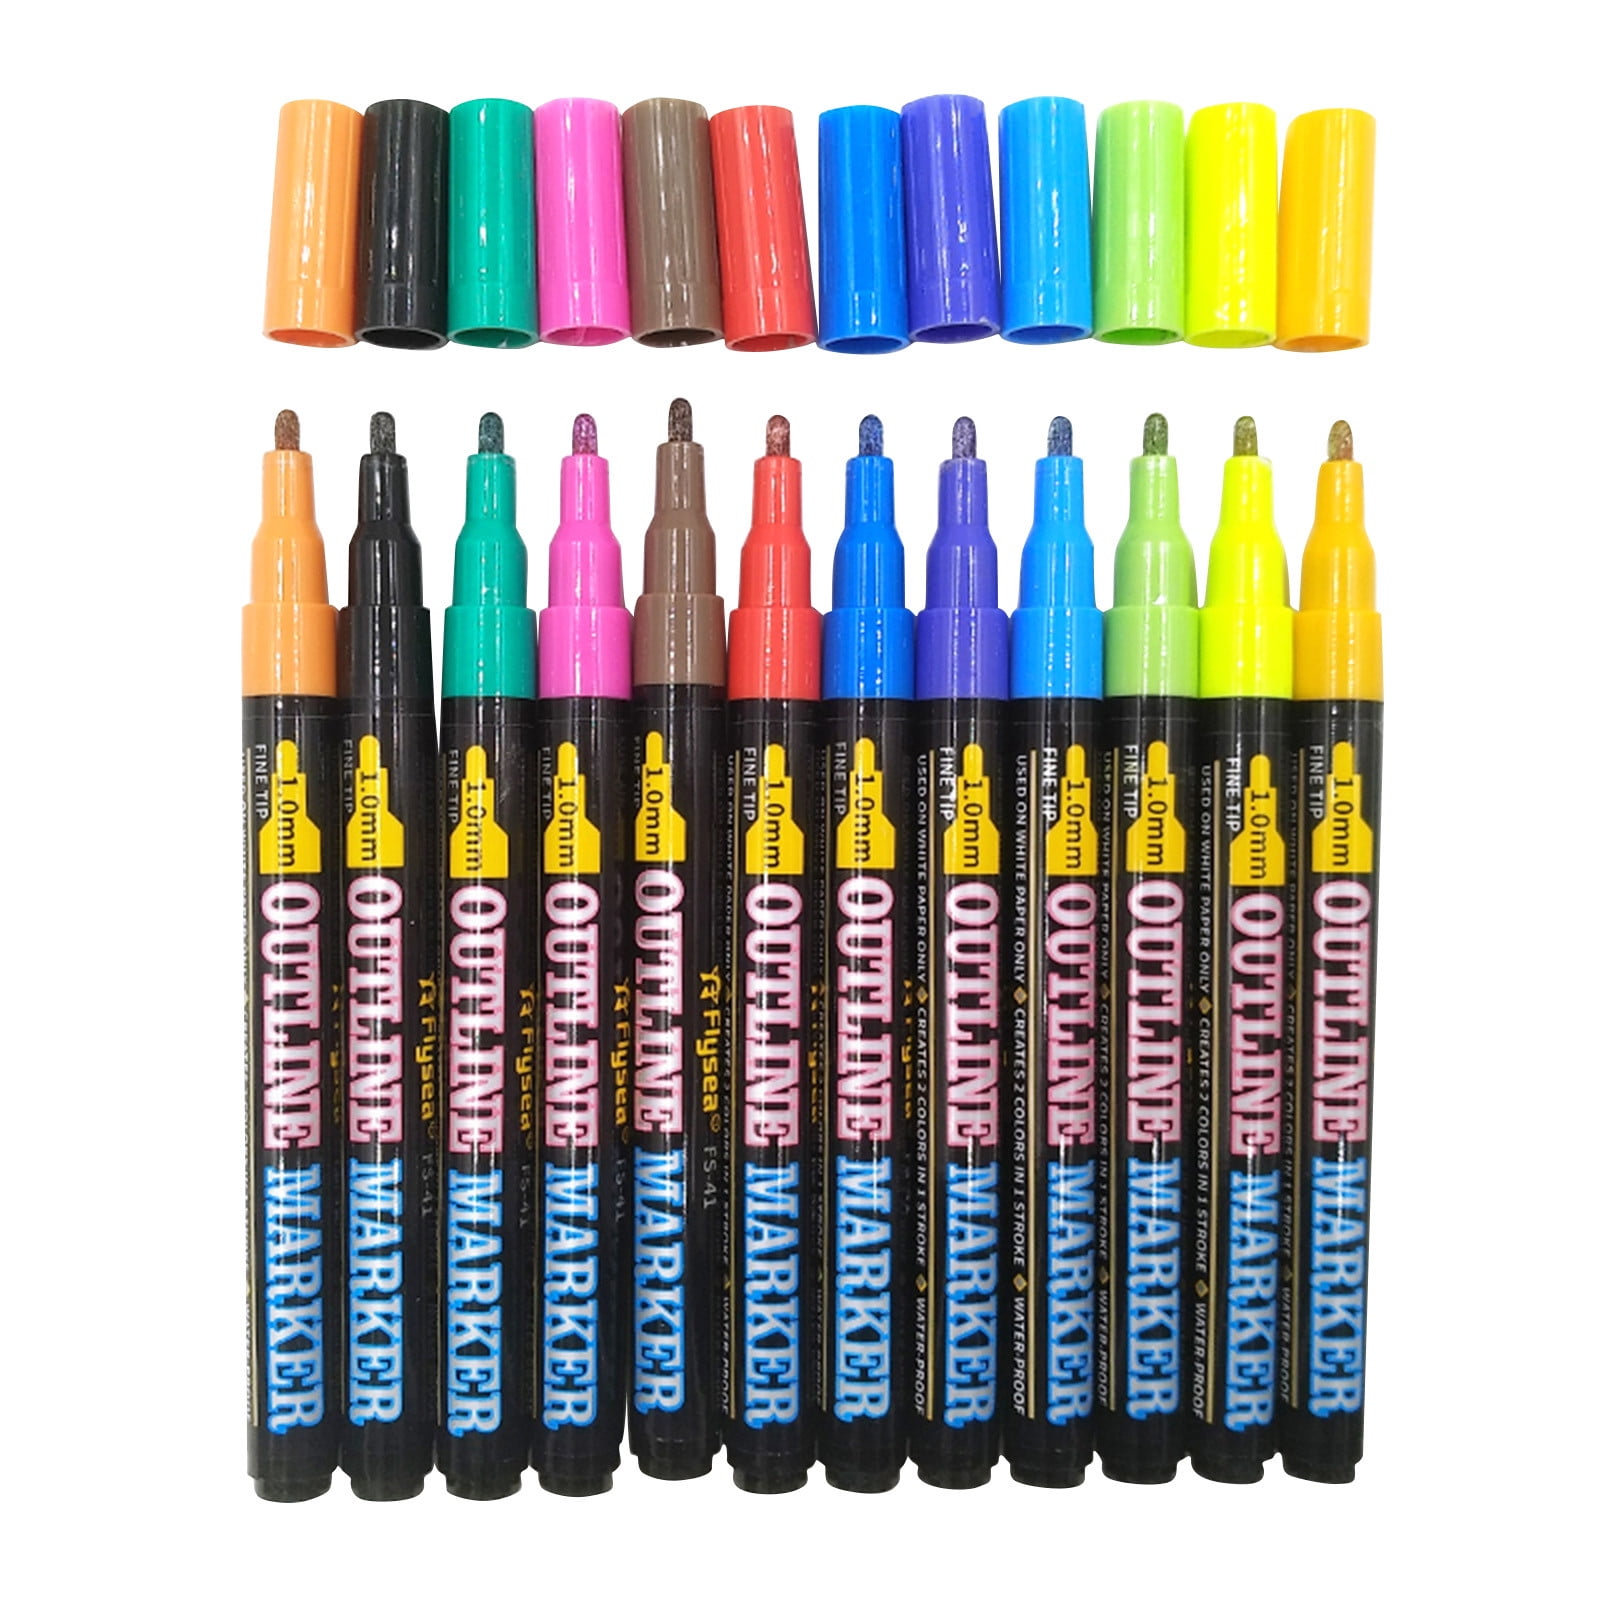 qucoqpe Pencil Sharpeners, 12 Pcs Manual Pencil Sharpeners, Aesthetic  School Supplies, Compact Dual Holes Pencil Sharpeners with Lid, Portable  Pencil